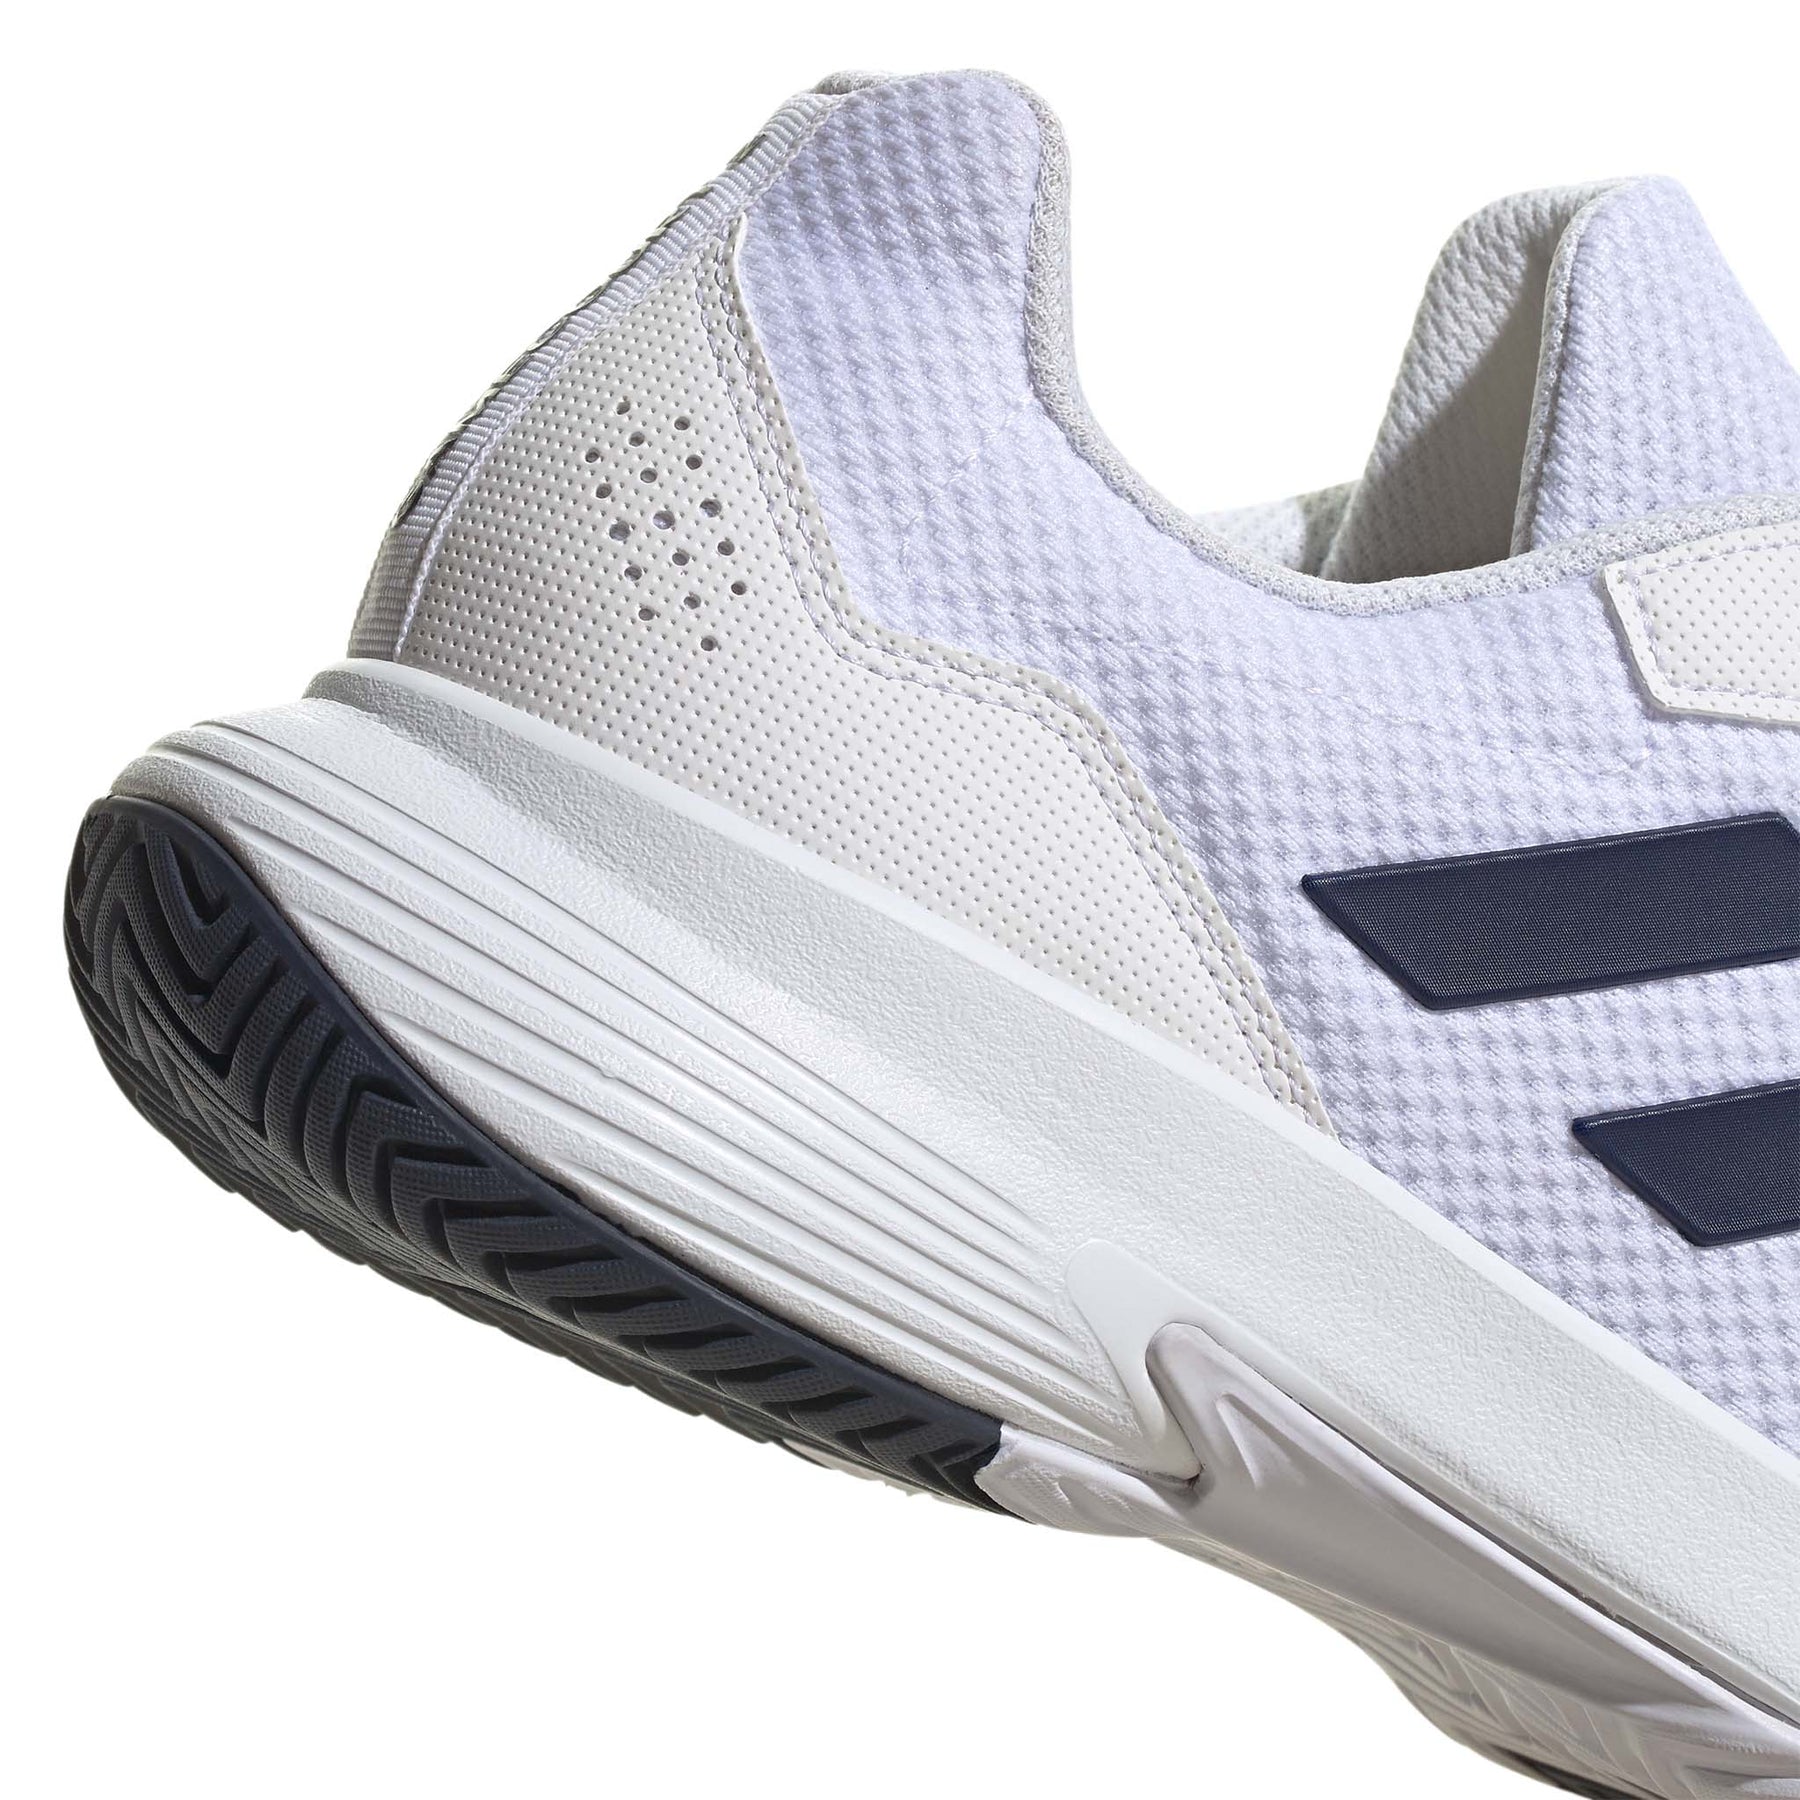 Adidas GameCourt 2 Mens Tennis Shoes: White